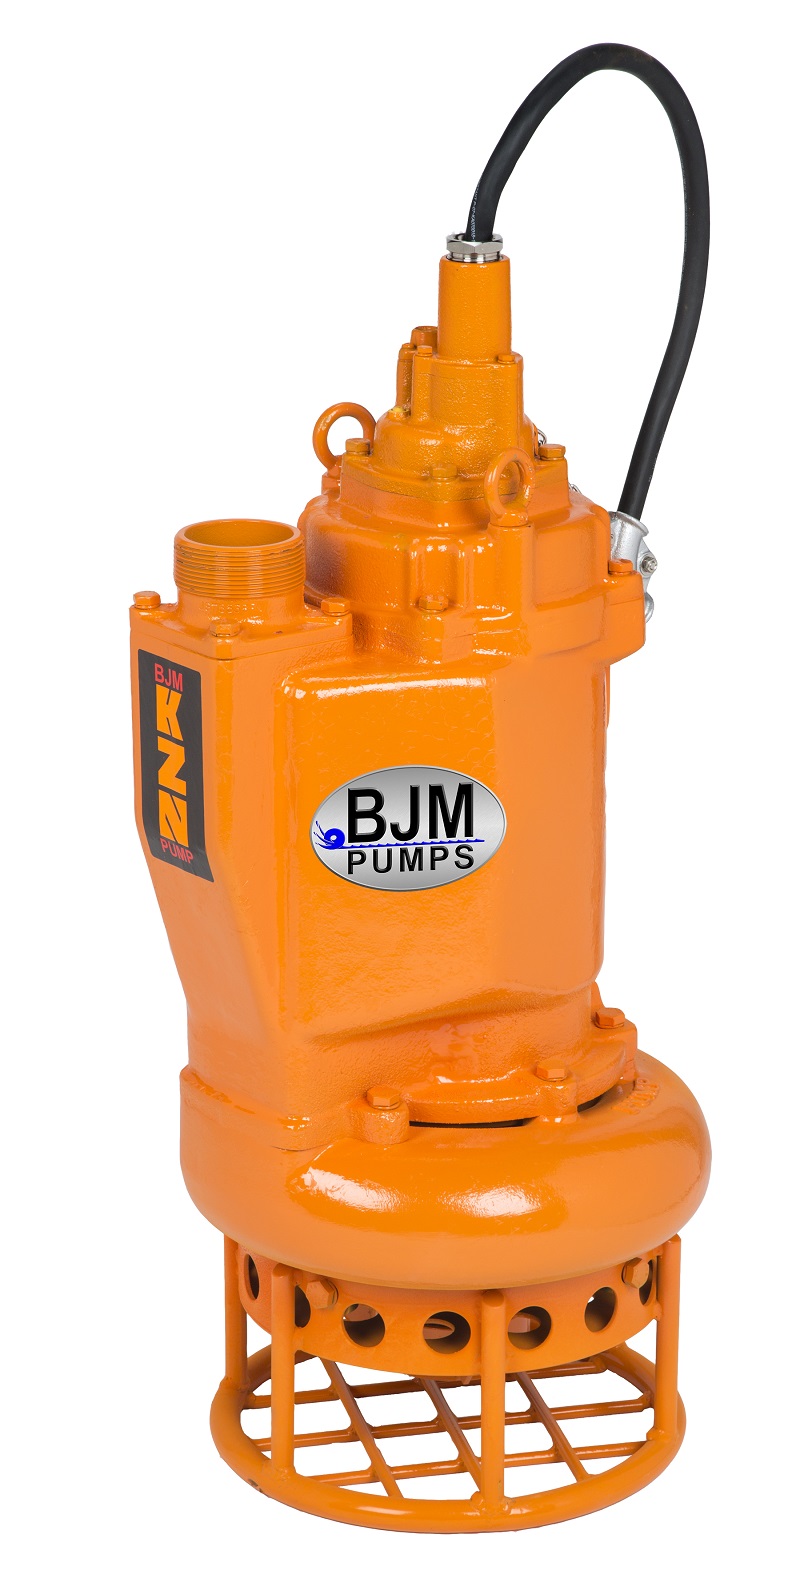 A KZN37 hard metal submersible slurry pump from BJM Pumps.